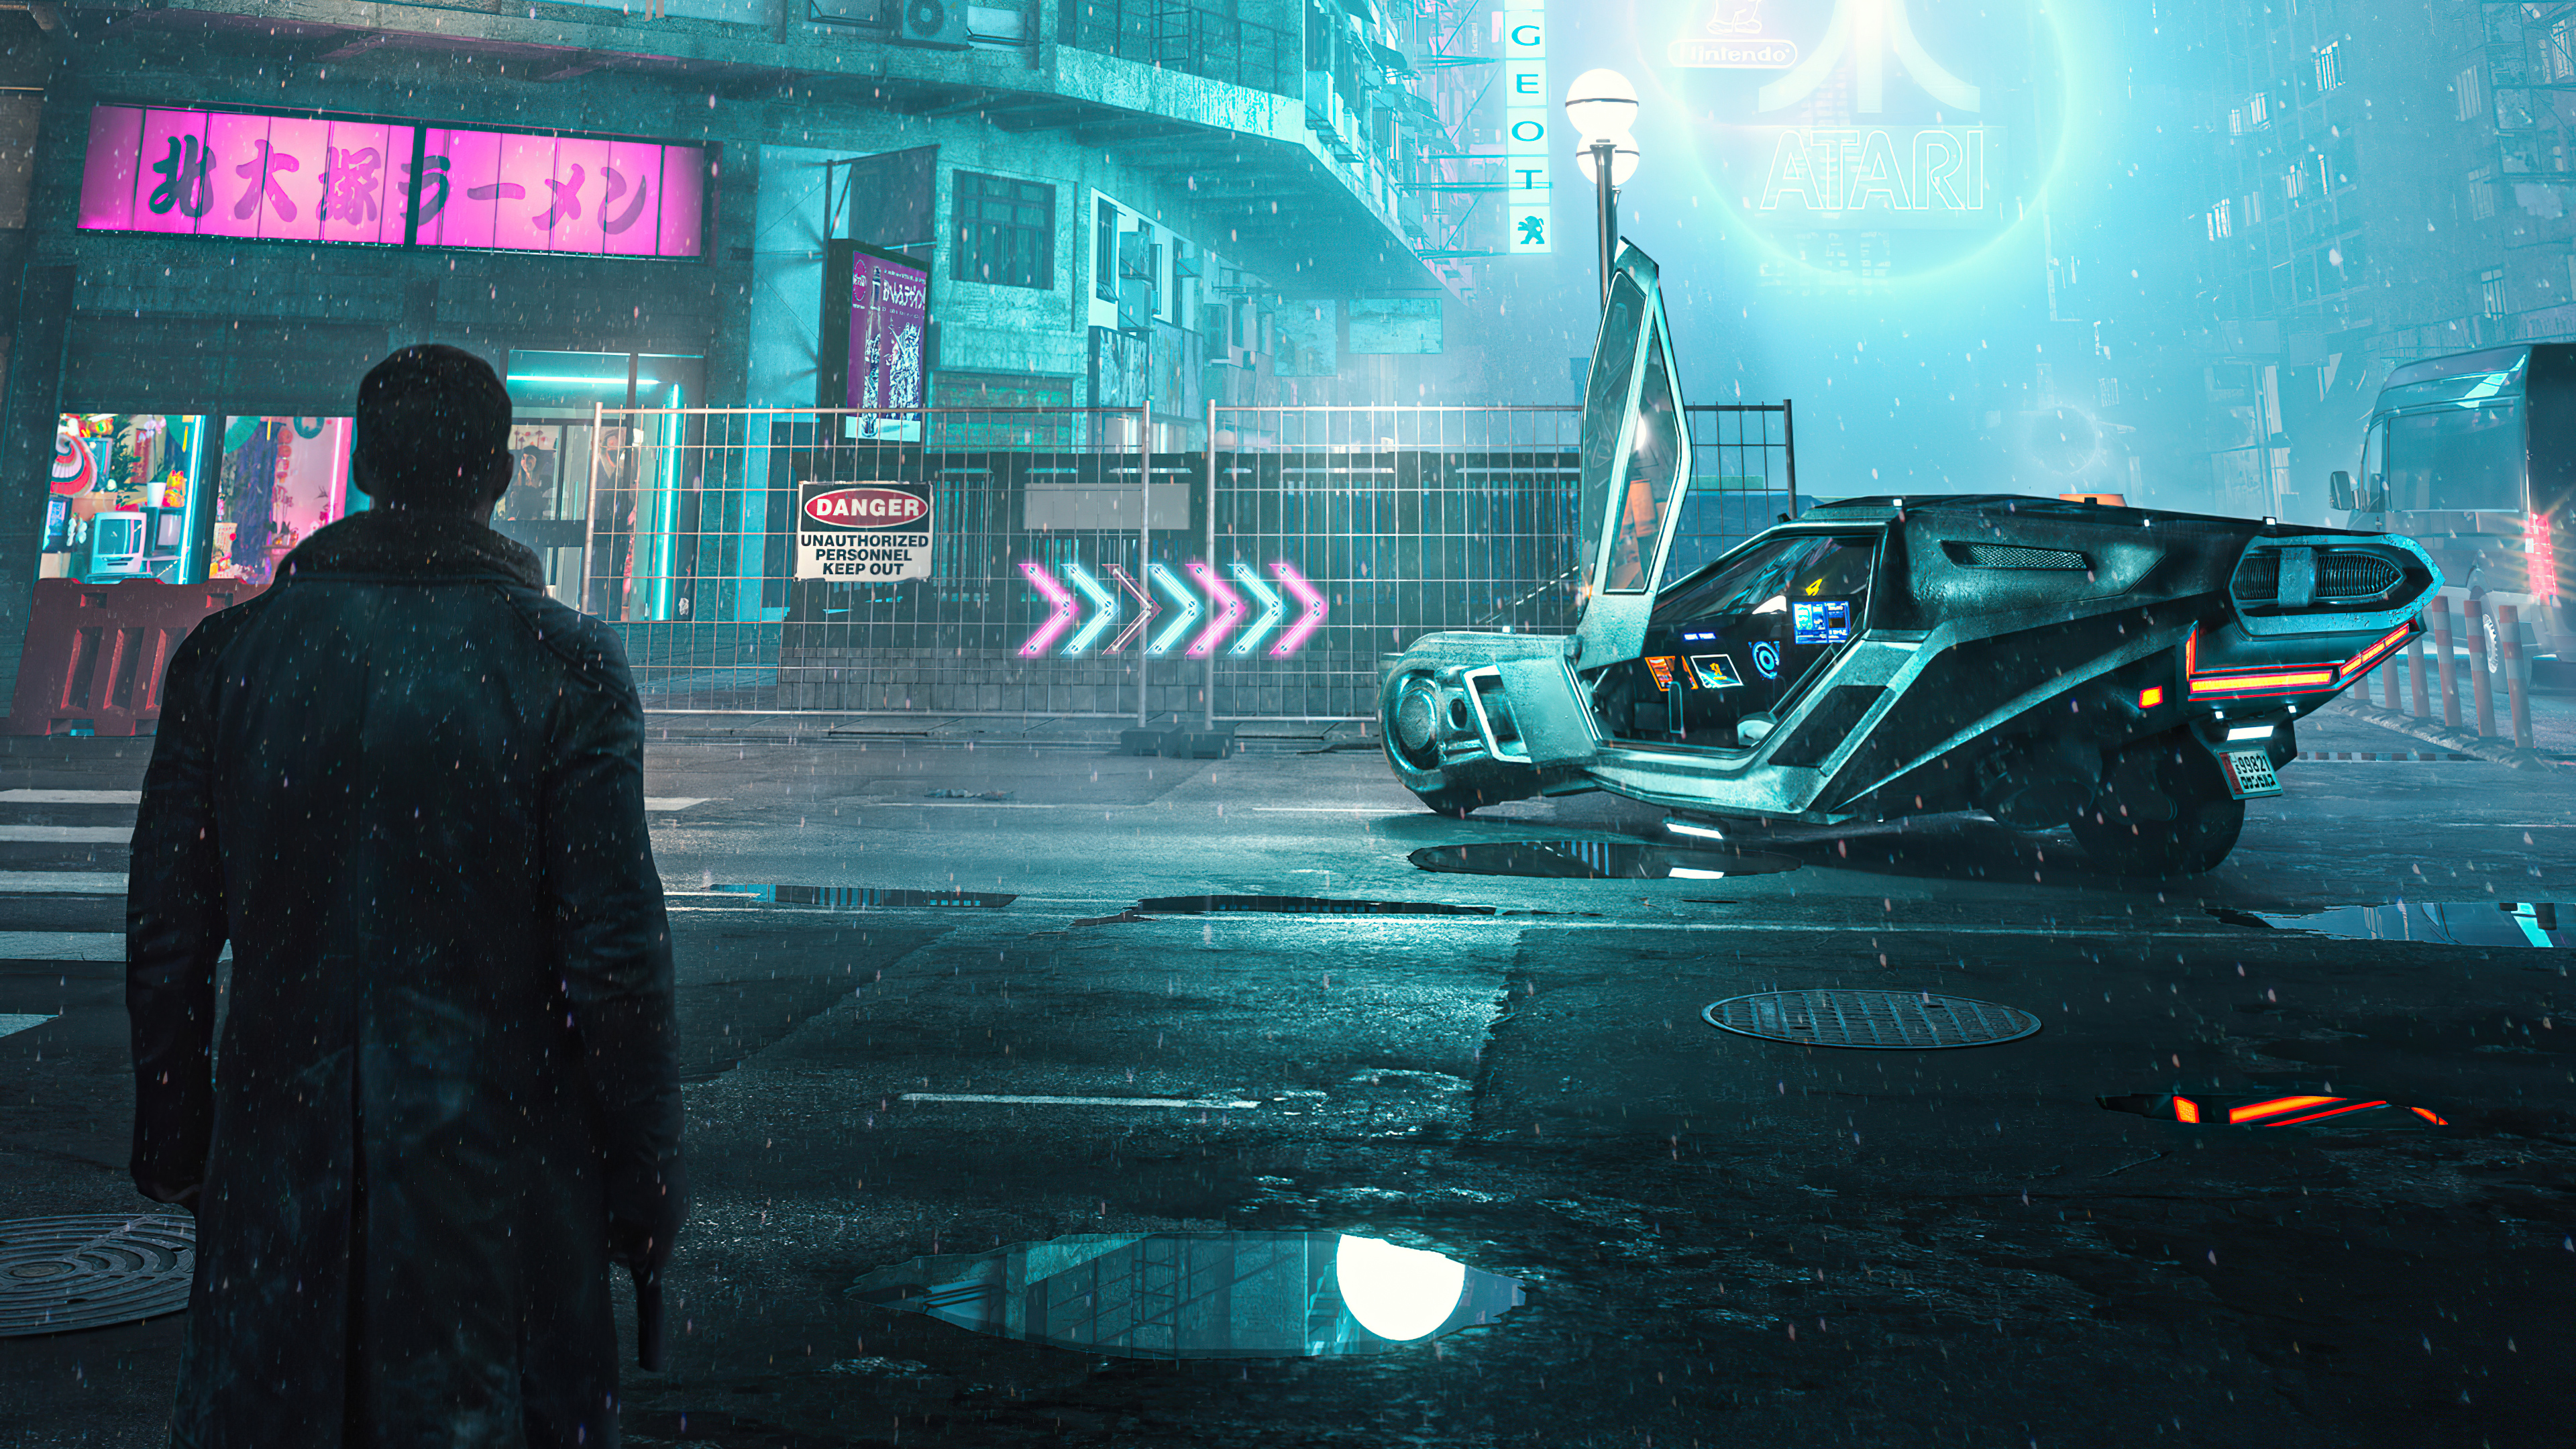 Blade Runner 2049 Tokyo Cyberpunk 4k, HD Artist, 4k Wallpaper, Image, Background, Photo and Picture